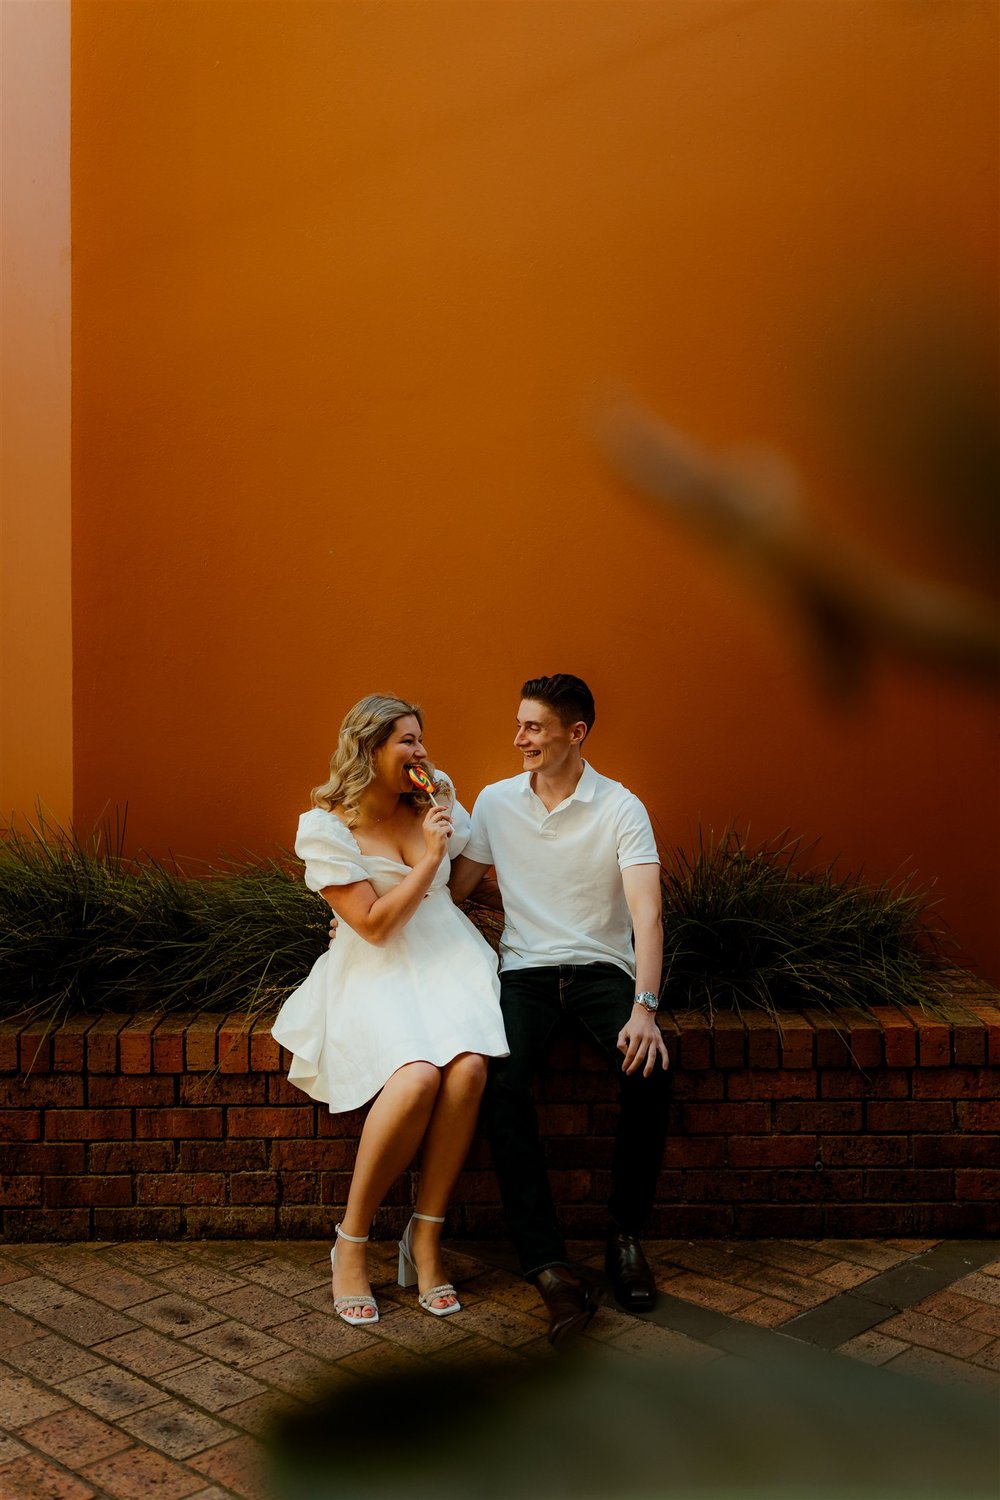 Melbourne-Engagement-Photographer-1005.jpg